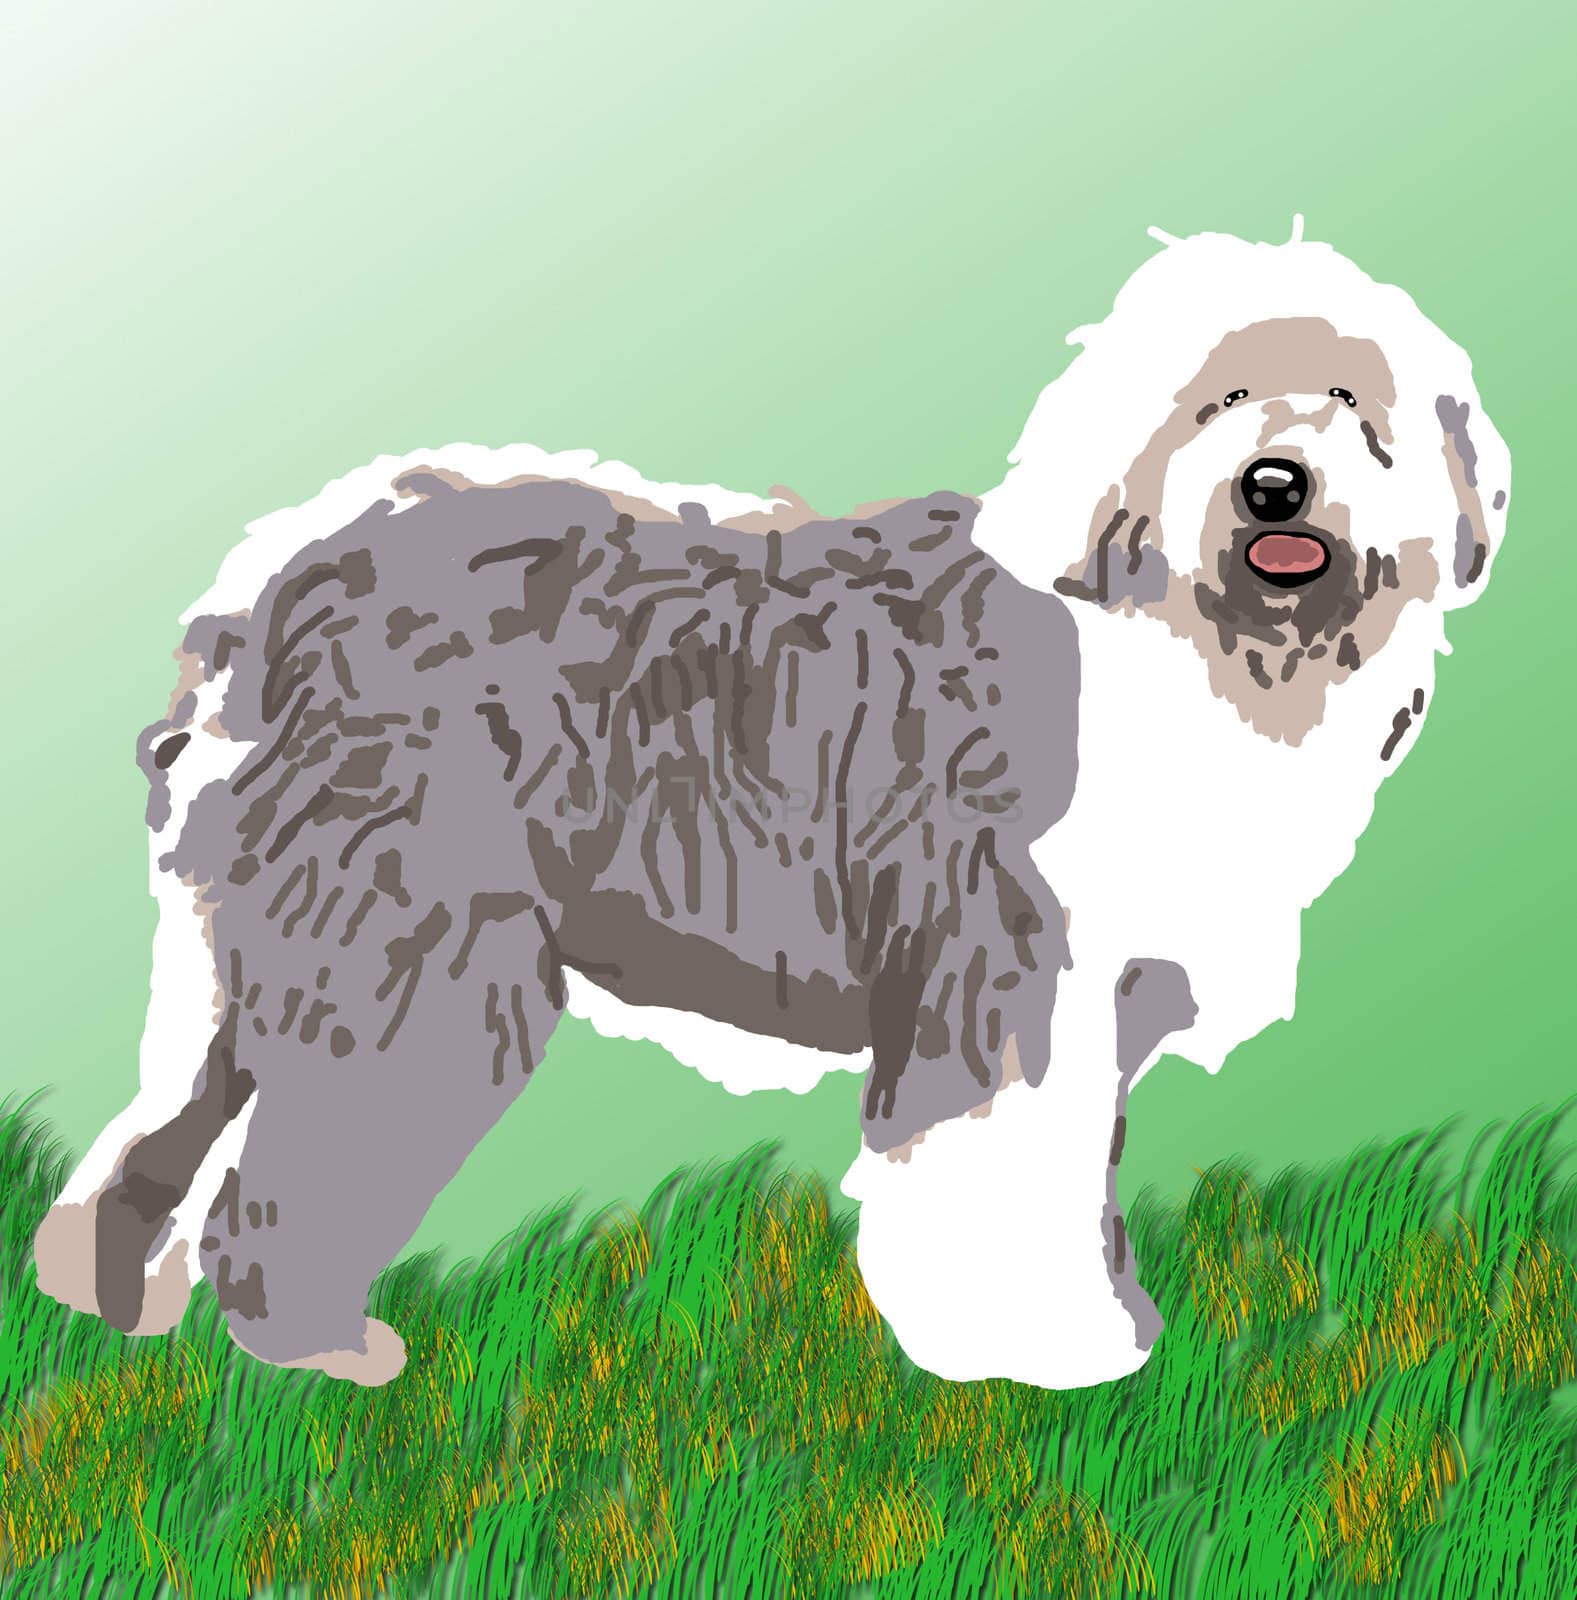 Sheepdog standing on alert on a grassy field.